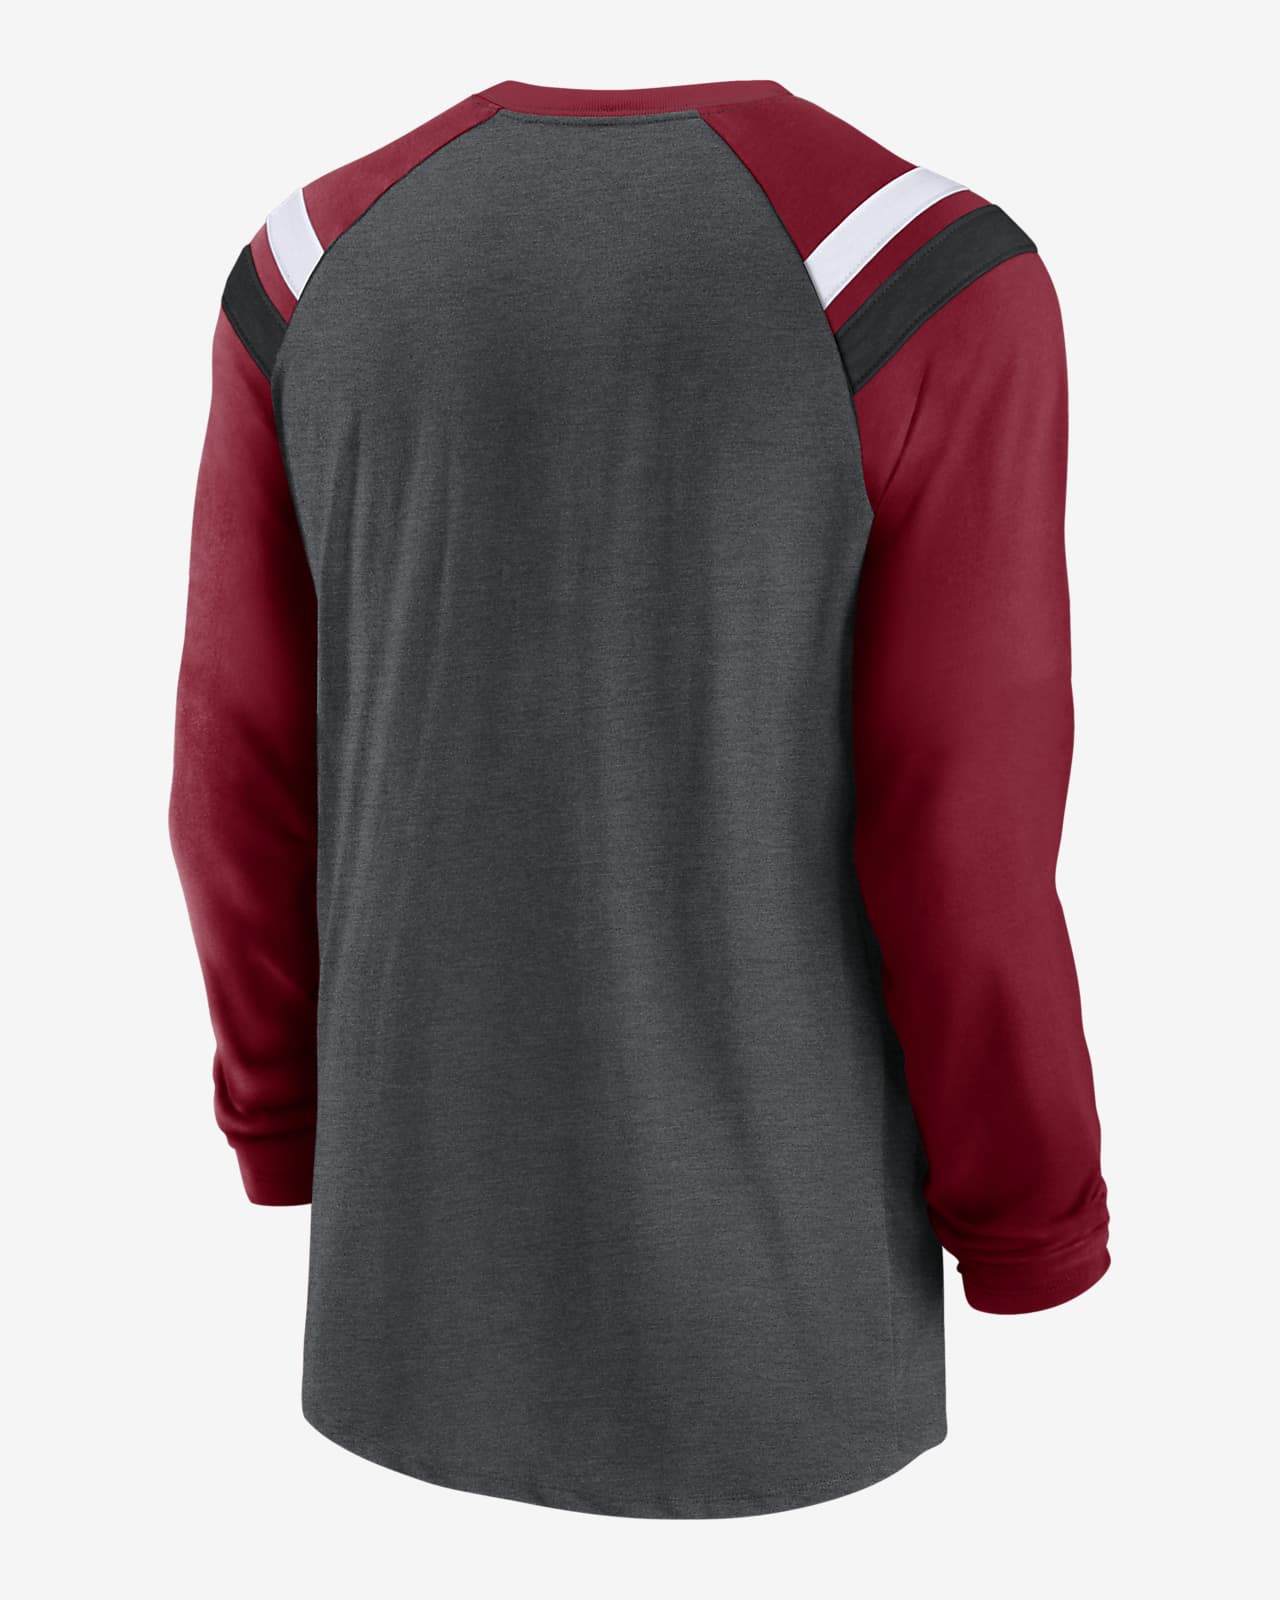 Nike Men's Arizona Cardinals Athletic Long Sleeve Raglan T-Shirt - Charcoal Heather & Red - L (Large)